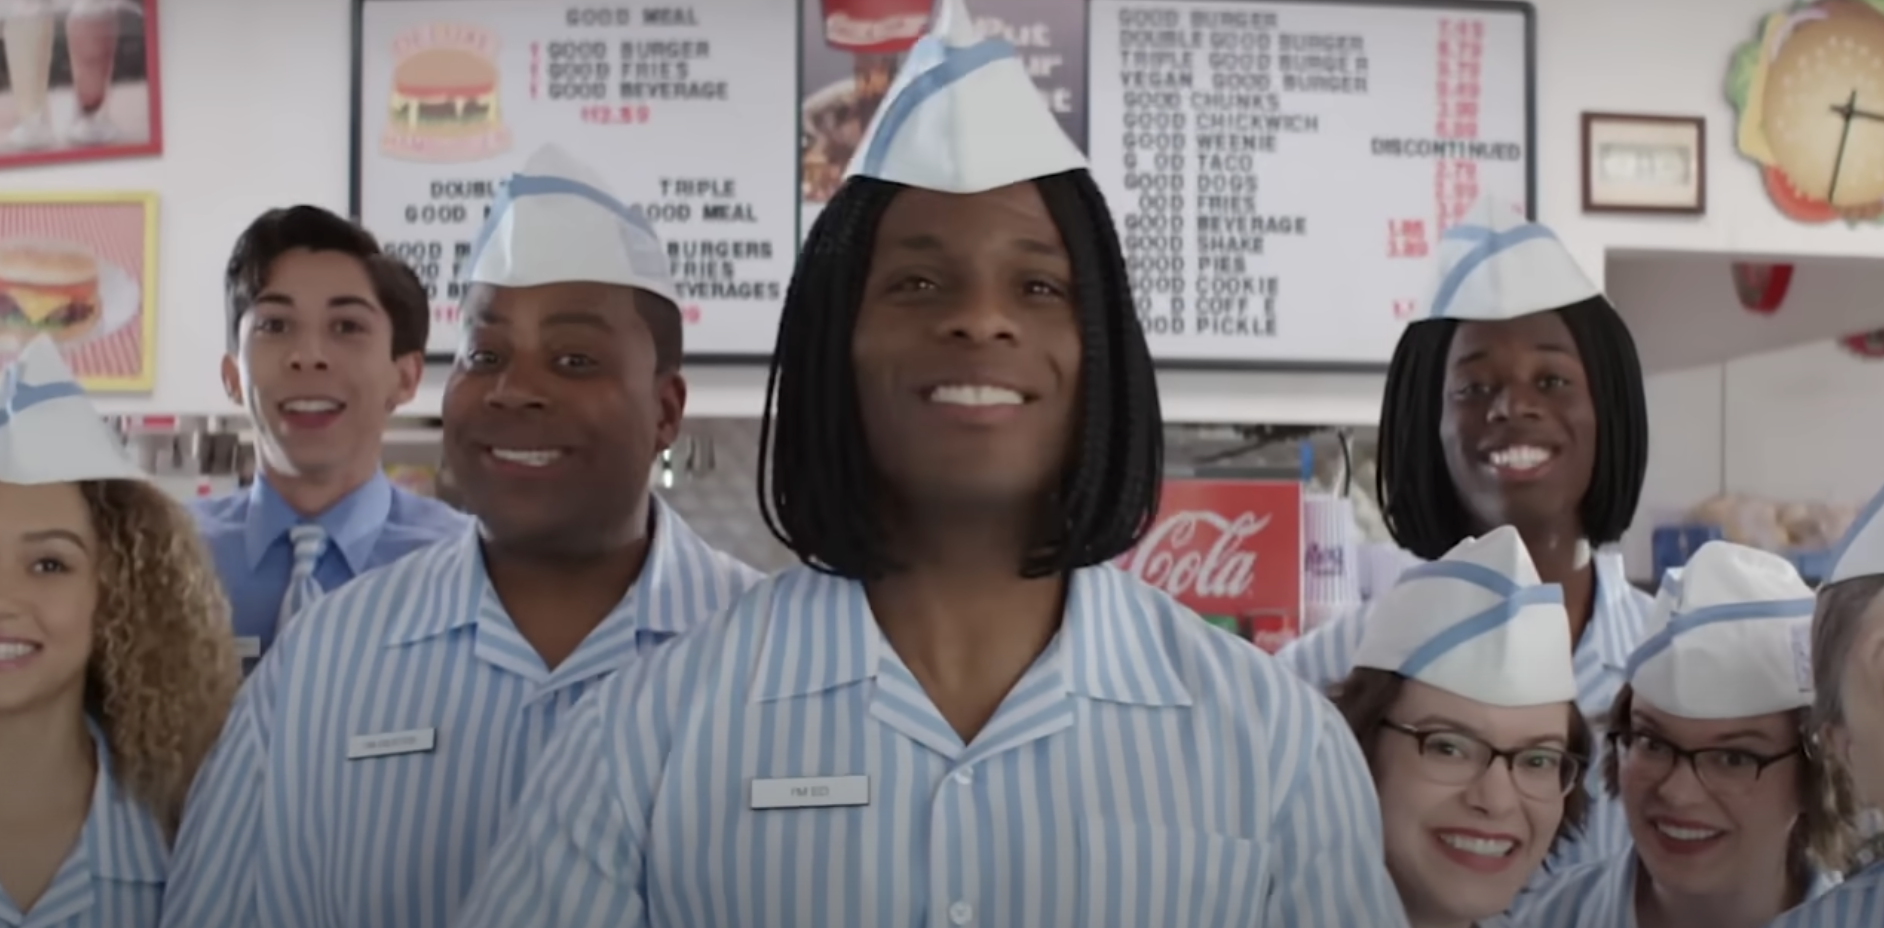 <div>Kai Cenat, Marsai Martin & More Make Appearances In New Trailer For ‘Good Burger 2’ Starring Kenan Thompson & Kel Mitchell</div>